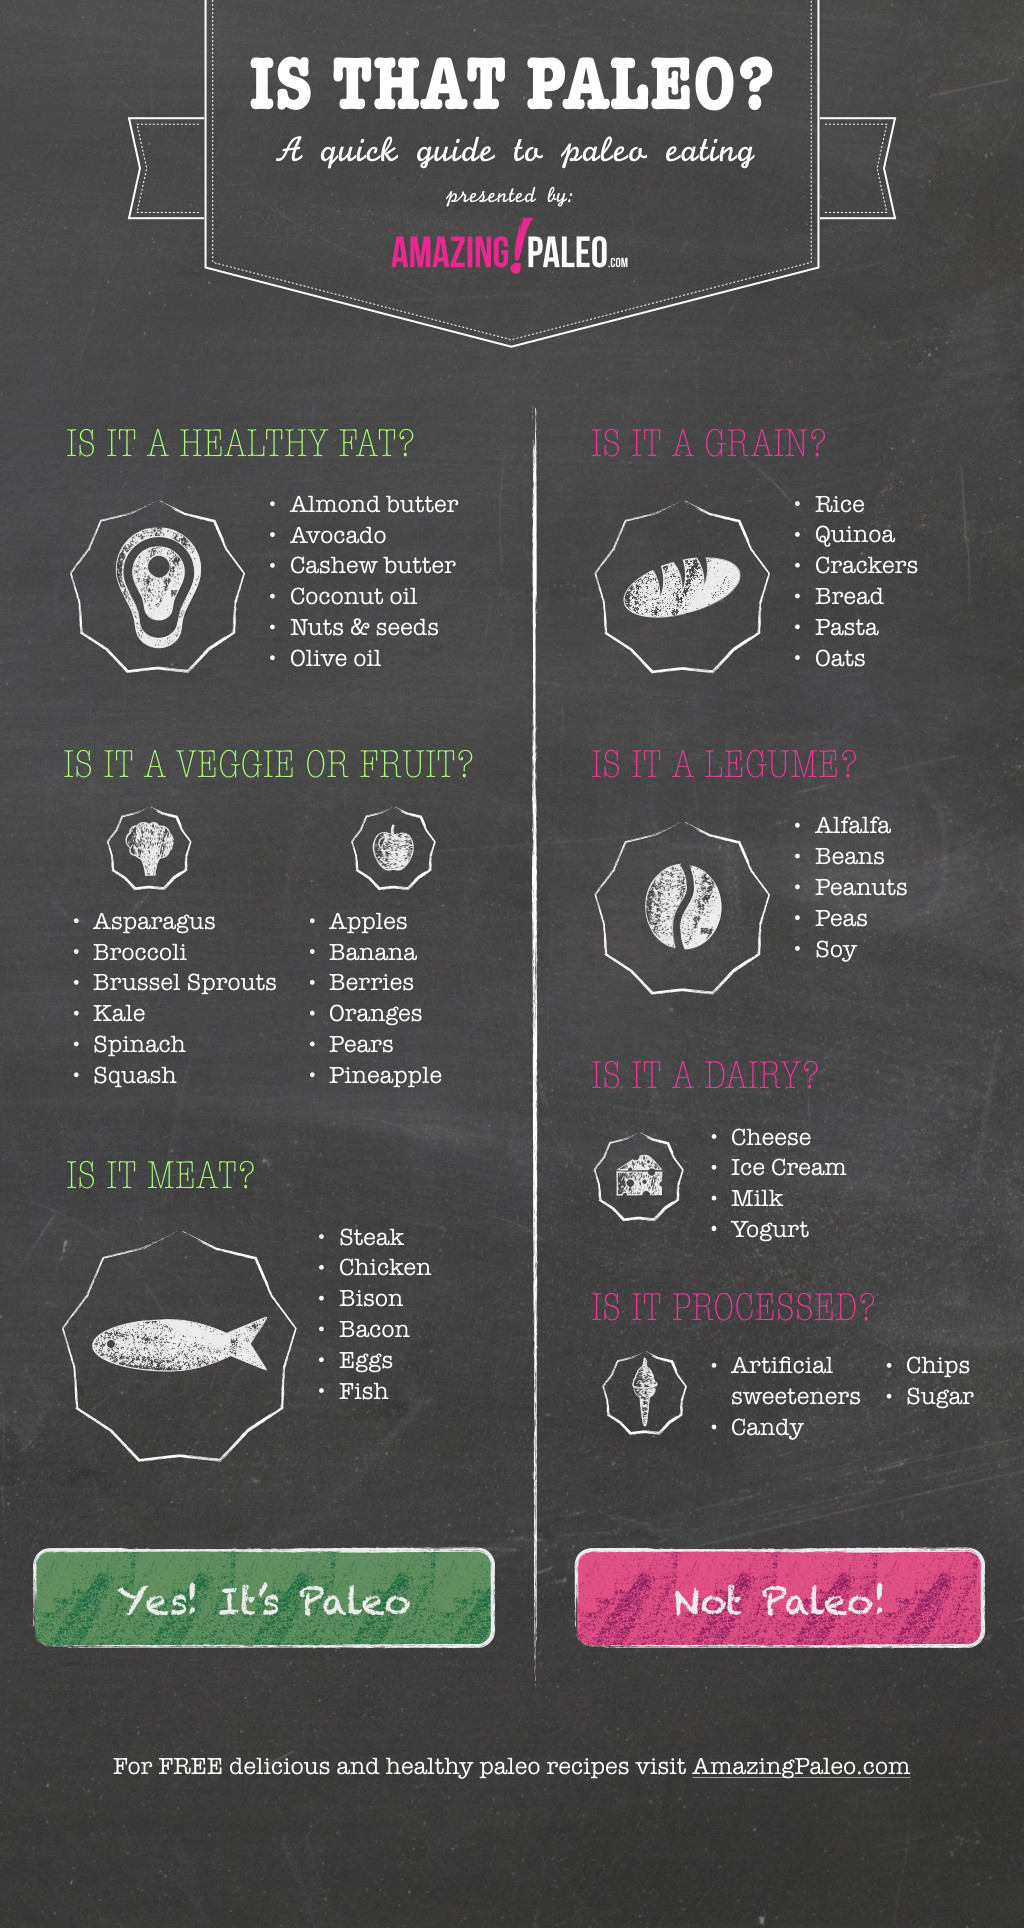 Paleo Diet Infographic
 5 Second Quick Paleo Diet Guide by AmazingPaleo